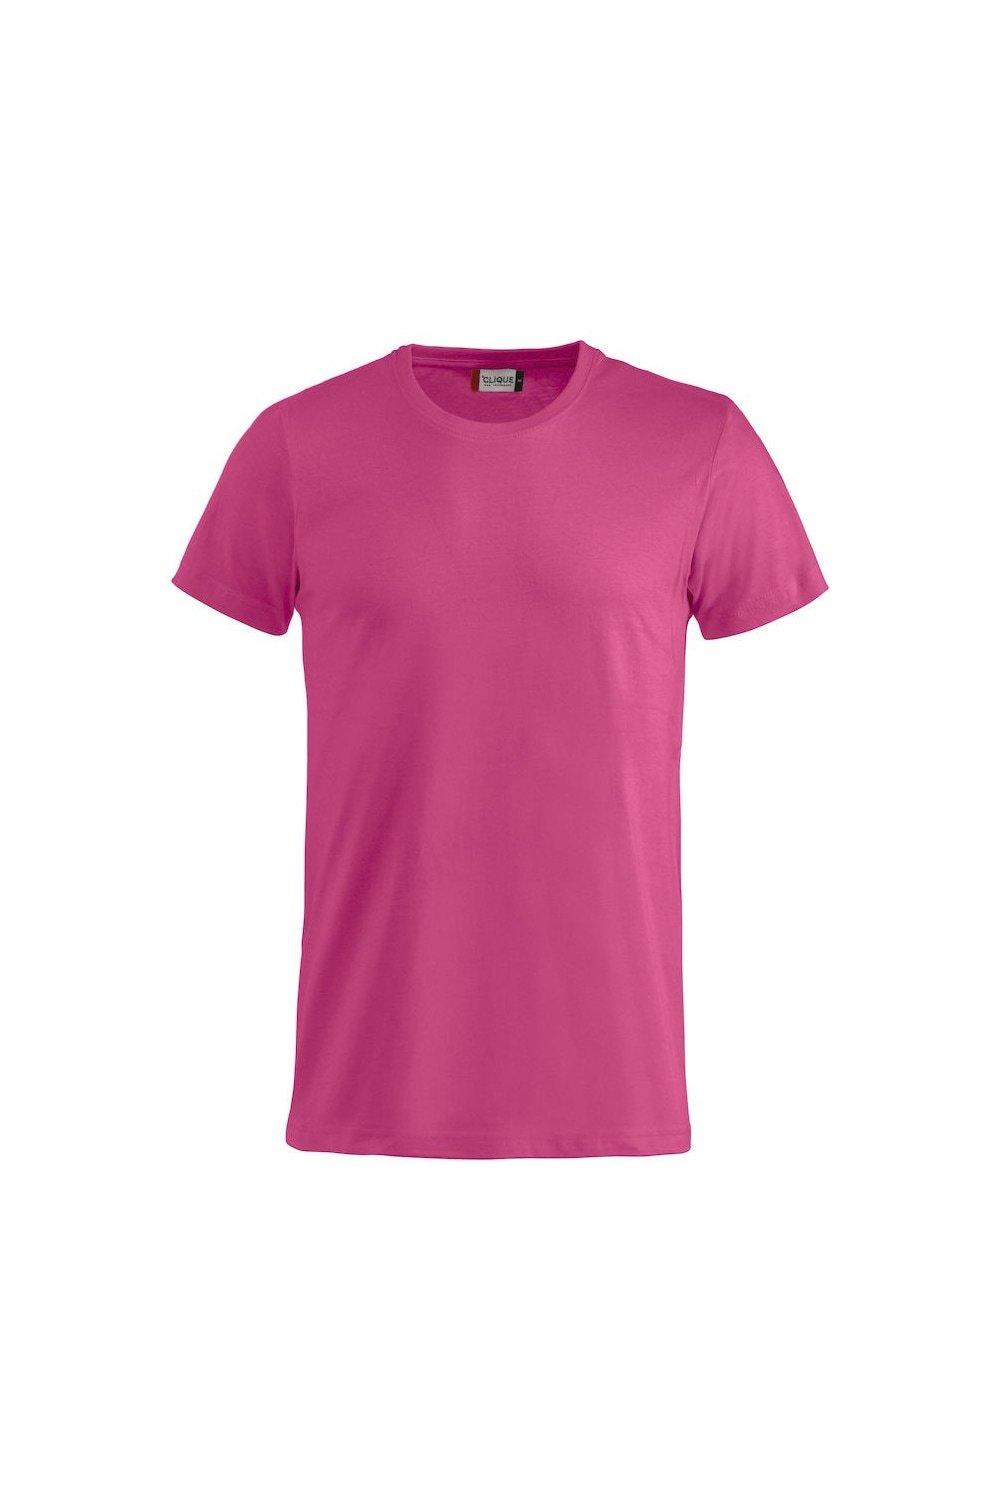 Базовая футболка Clique, розовый футболка clique с надписью 42 размер